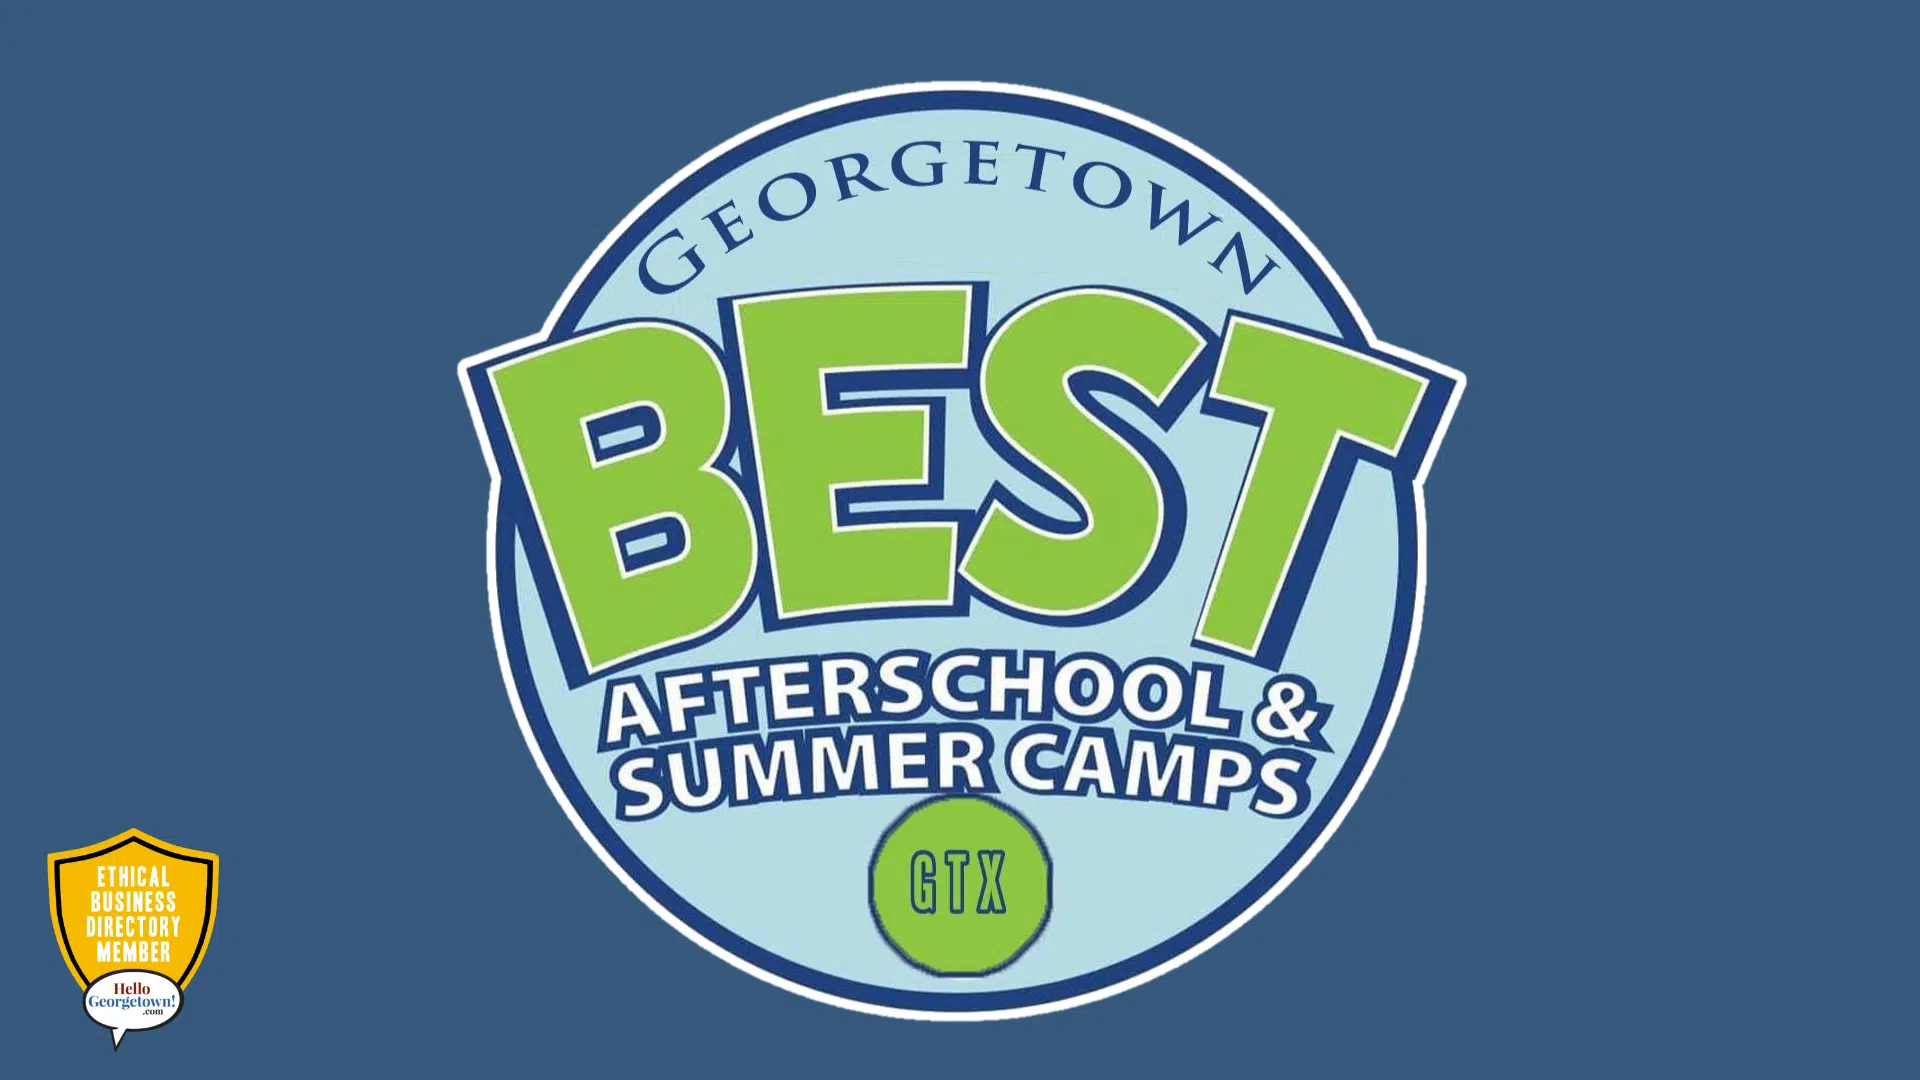 Georgetown Best Summer Camp Georgetown Texas with Badge